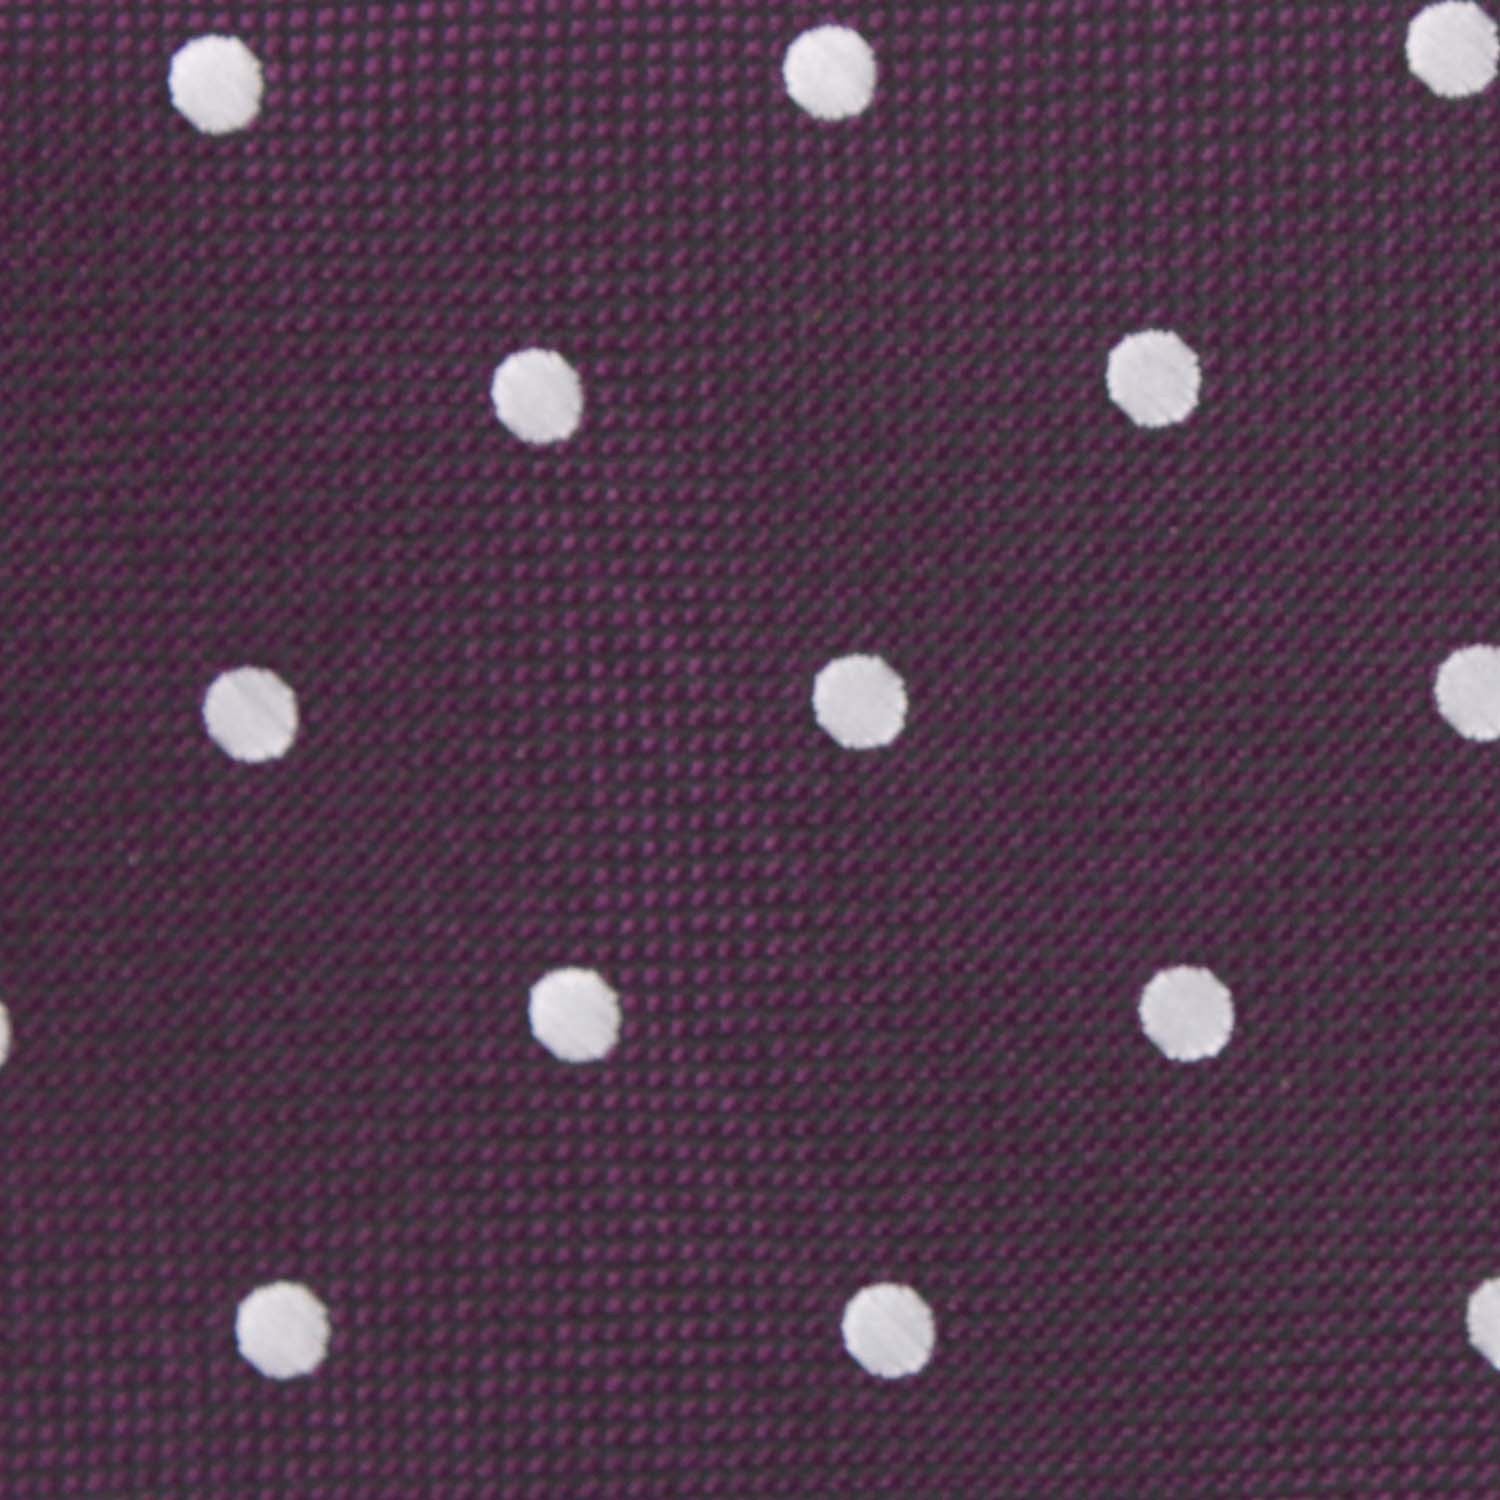 Eggplant Plum Purple with White Polka Dots Fabric Self Tie Bow Tie M124